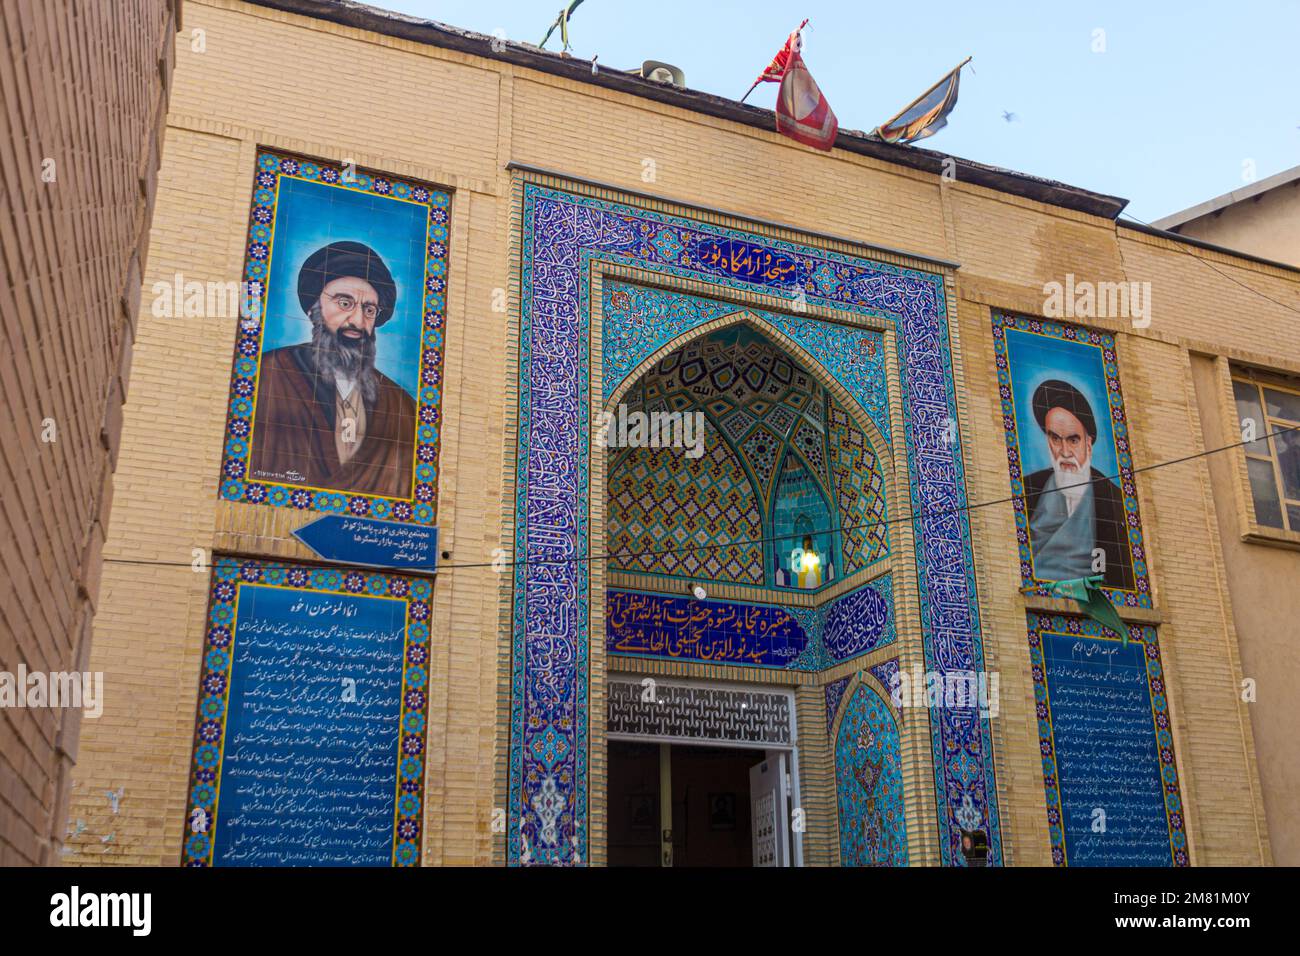 SHIRAZ, IRAN - JULY 6, 2019: Portraits of Ali Khamenei and Ruhollah Khomeini on a building in Shiraz, Iran. Stock Photo